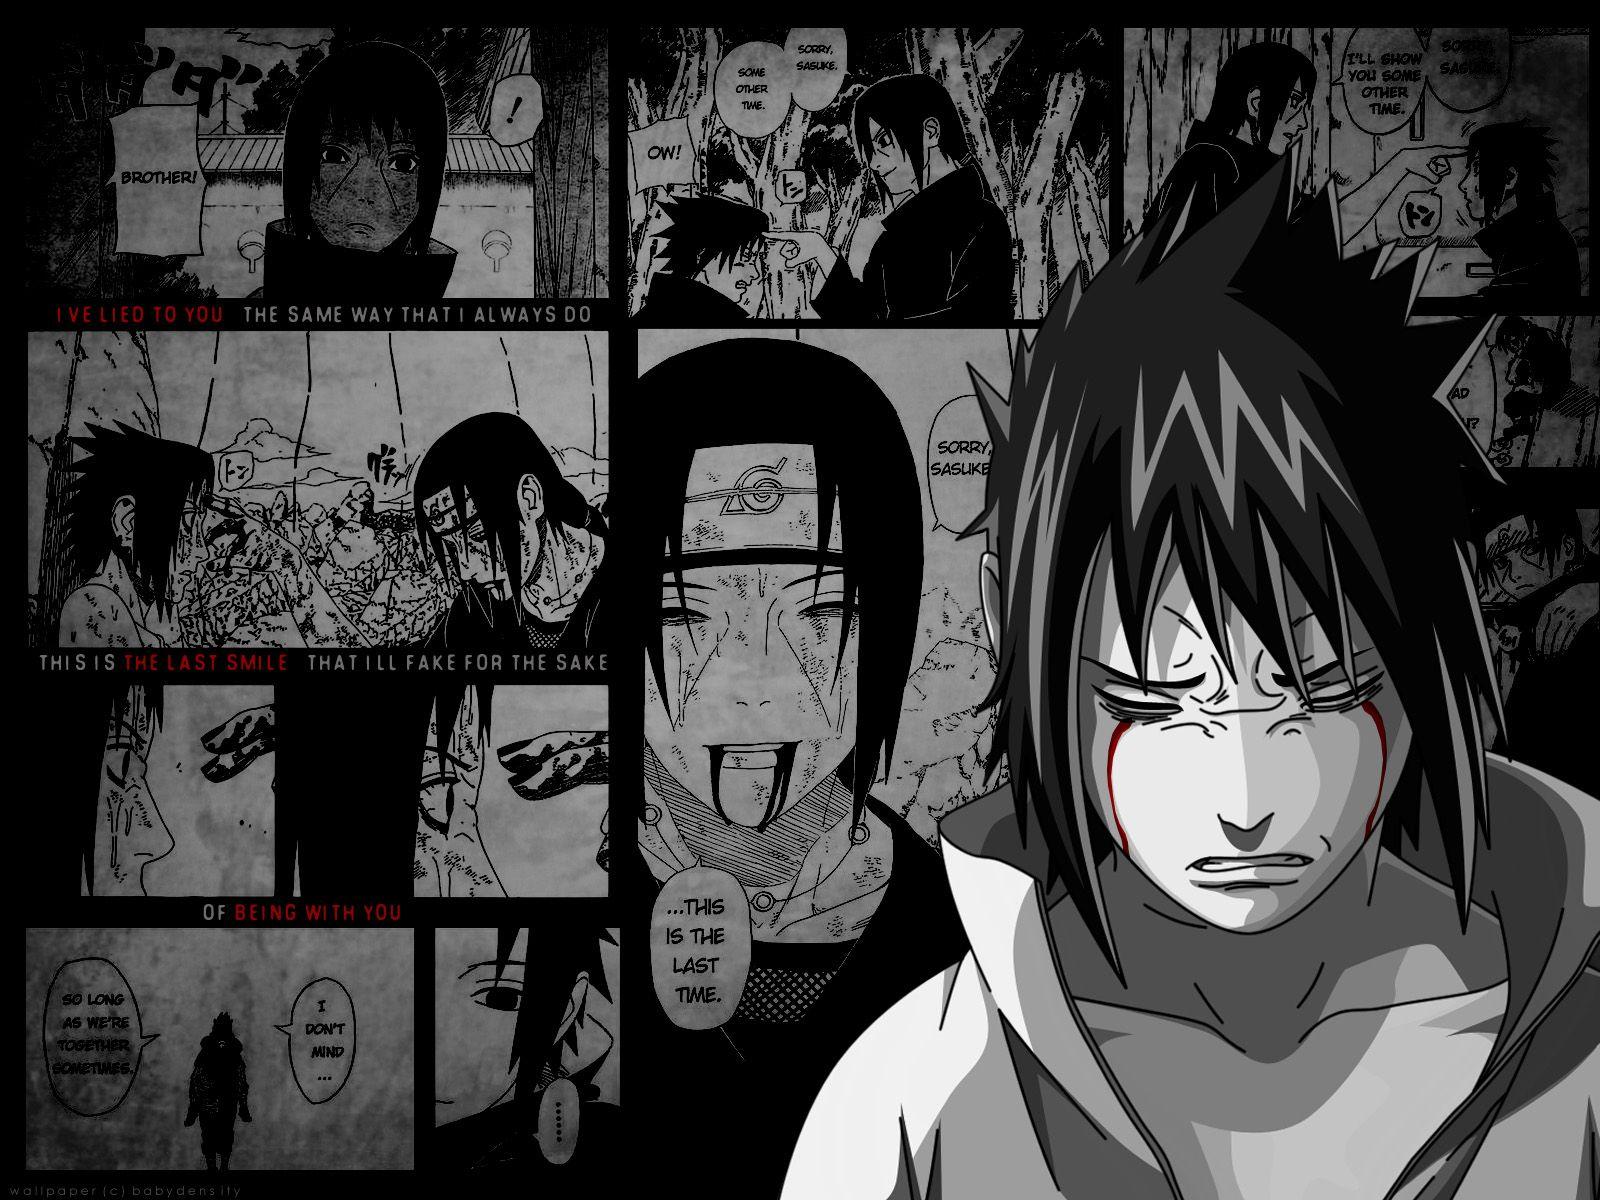 Sasuke Manga Wallpaper Free Sasuke Manga Background